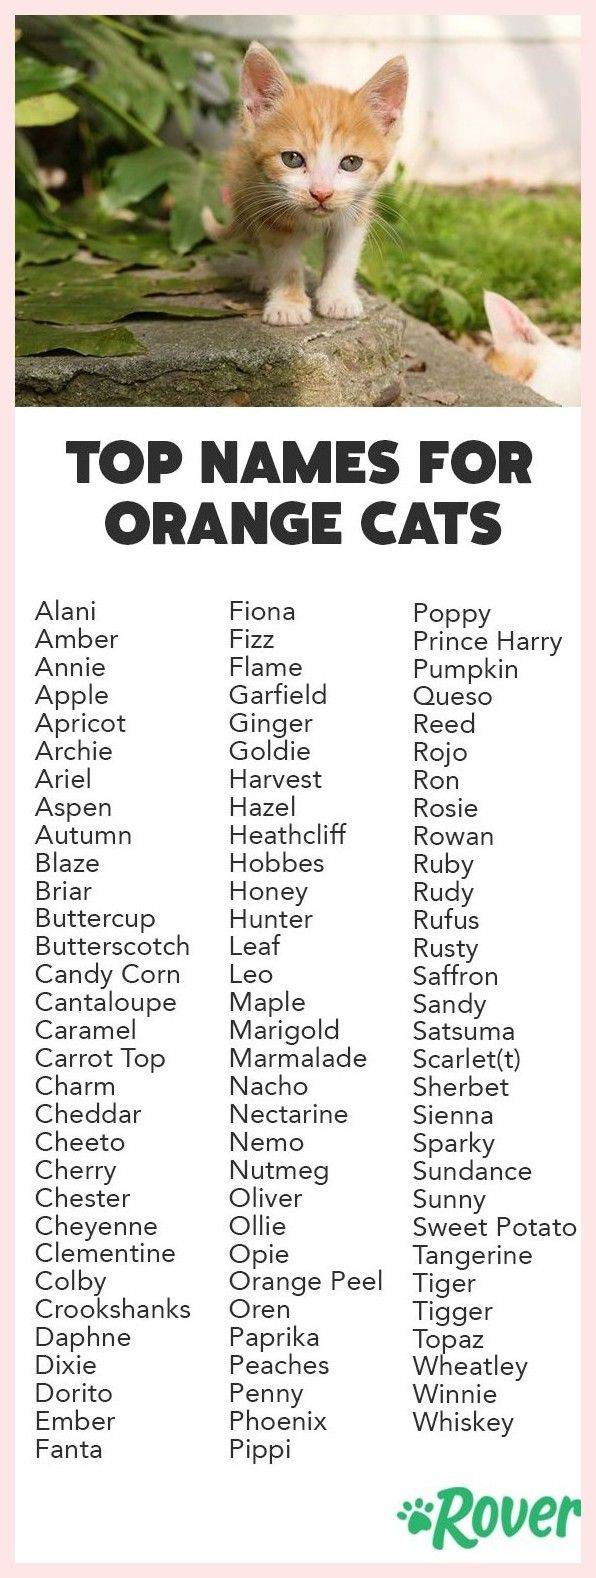 Клички для котов мейн кунов: имя с оглядкой на характер и окрас.